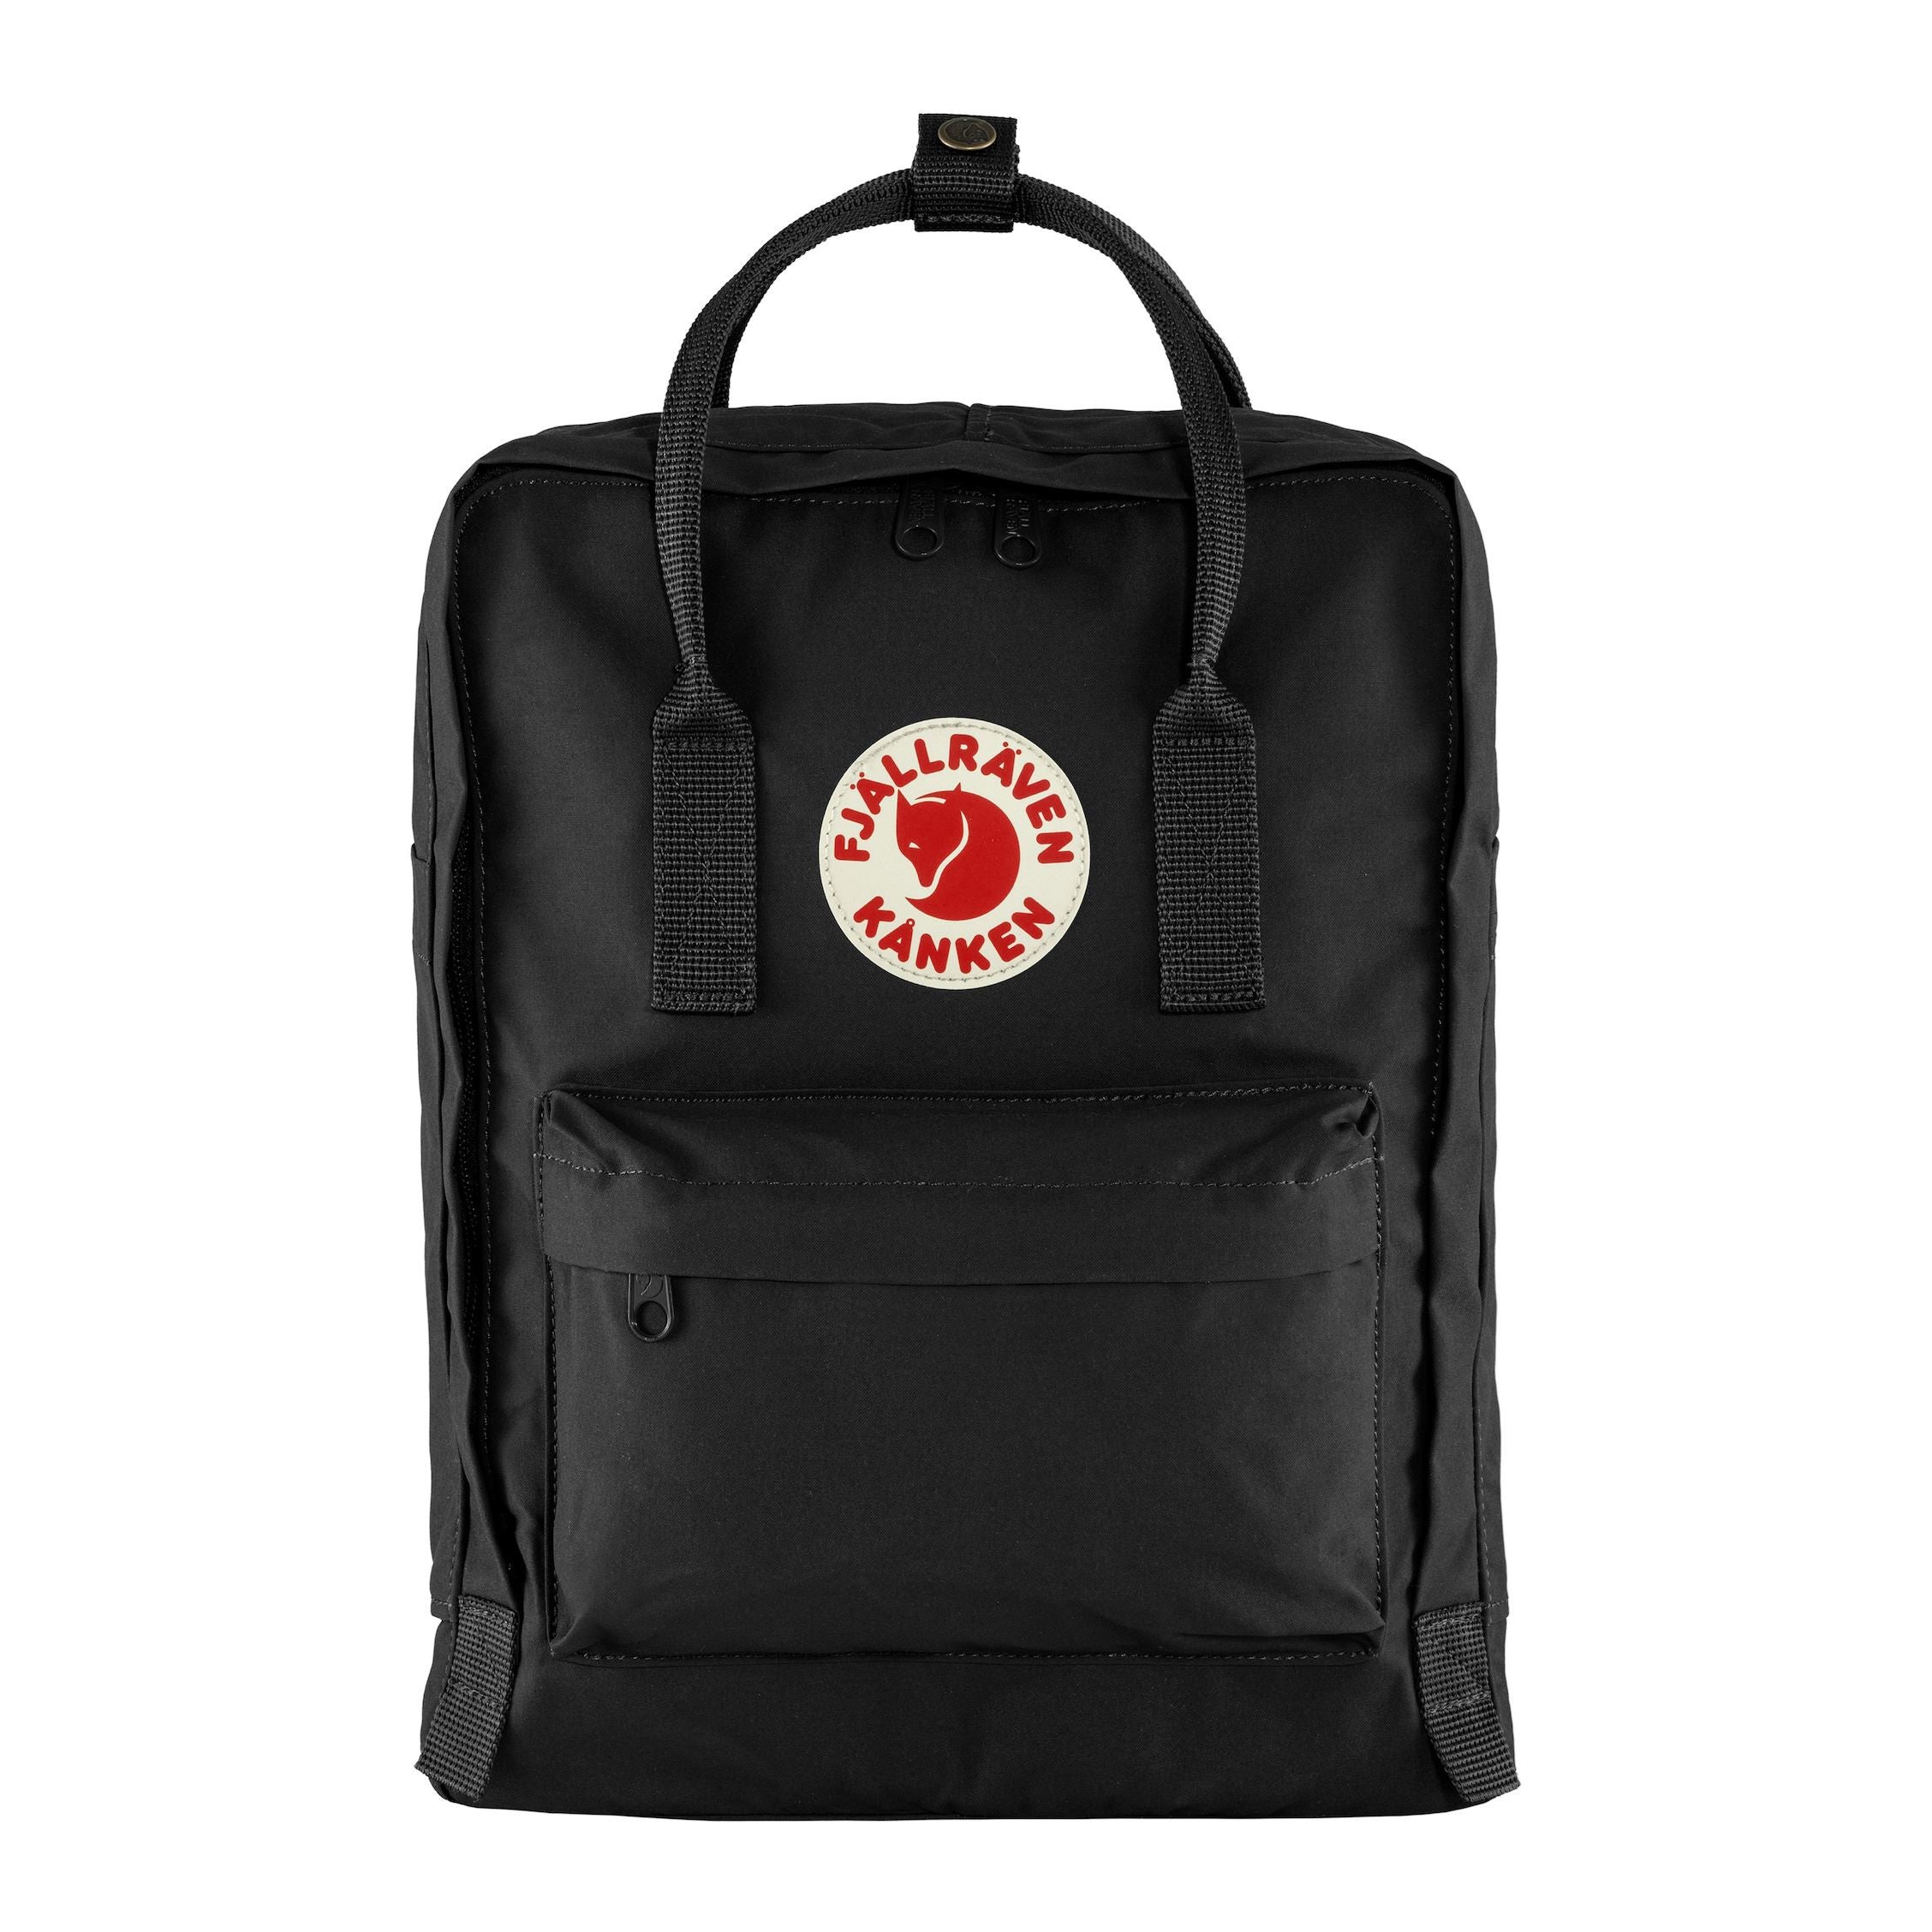 Unisex Kanken Black Backpack